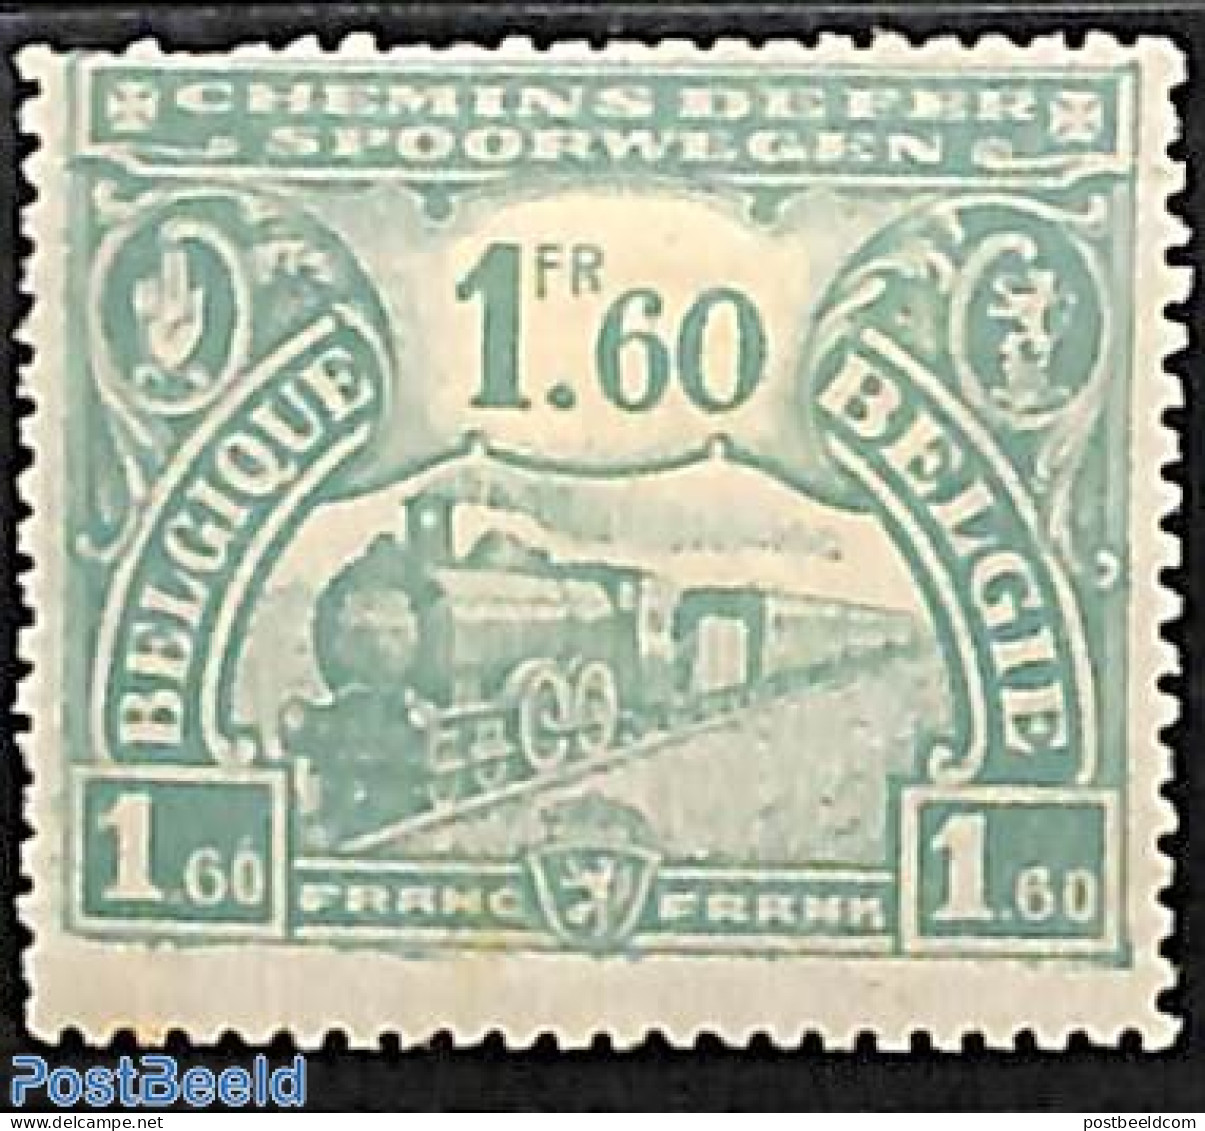 Belgium 1920 1.60Fr, Stamp Out Of Set, Unused (hinged), Transport - Ungebraucht